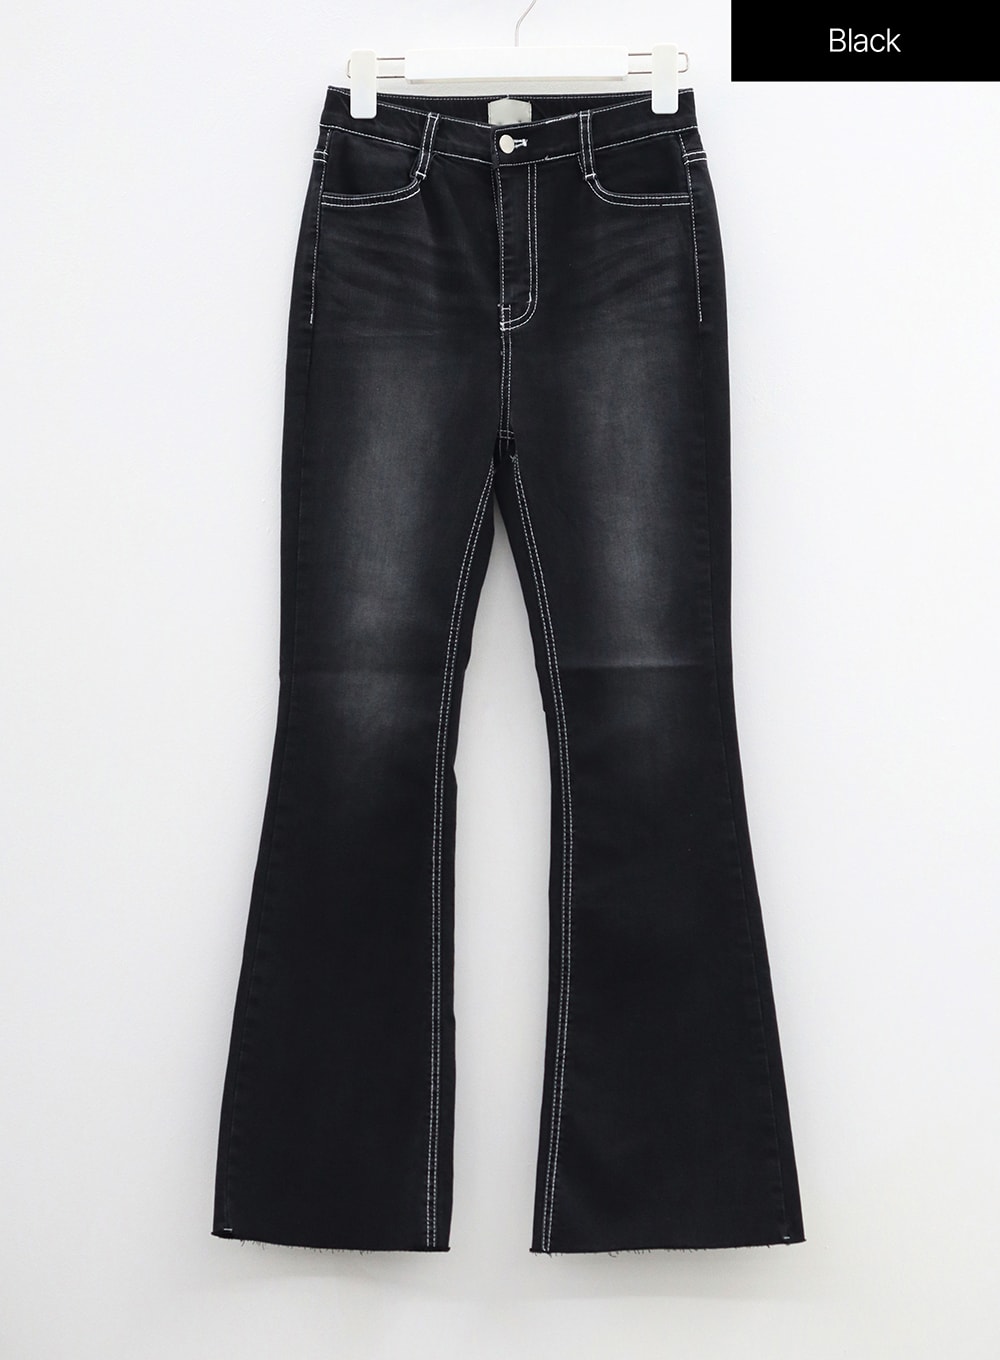 Black Bootcut Jeans BF309